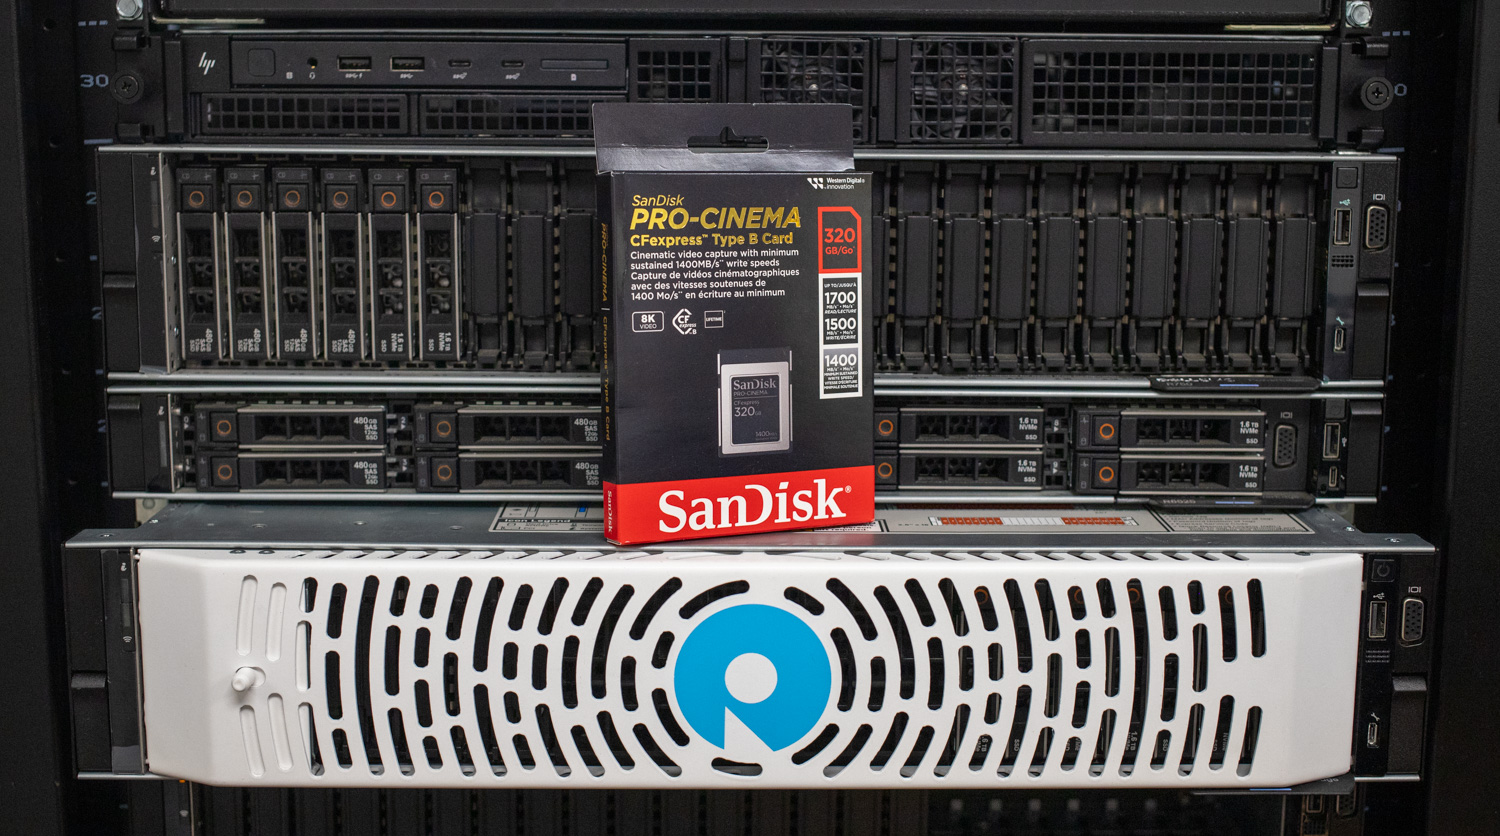 SanDisk PRO-CINEMA CFexpress Type B Memory Card Package